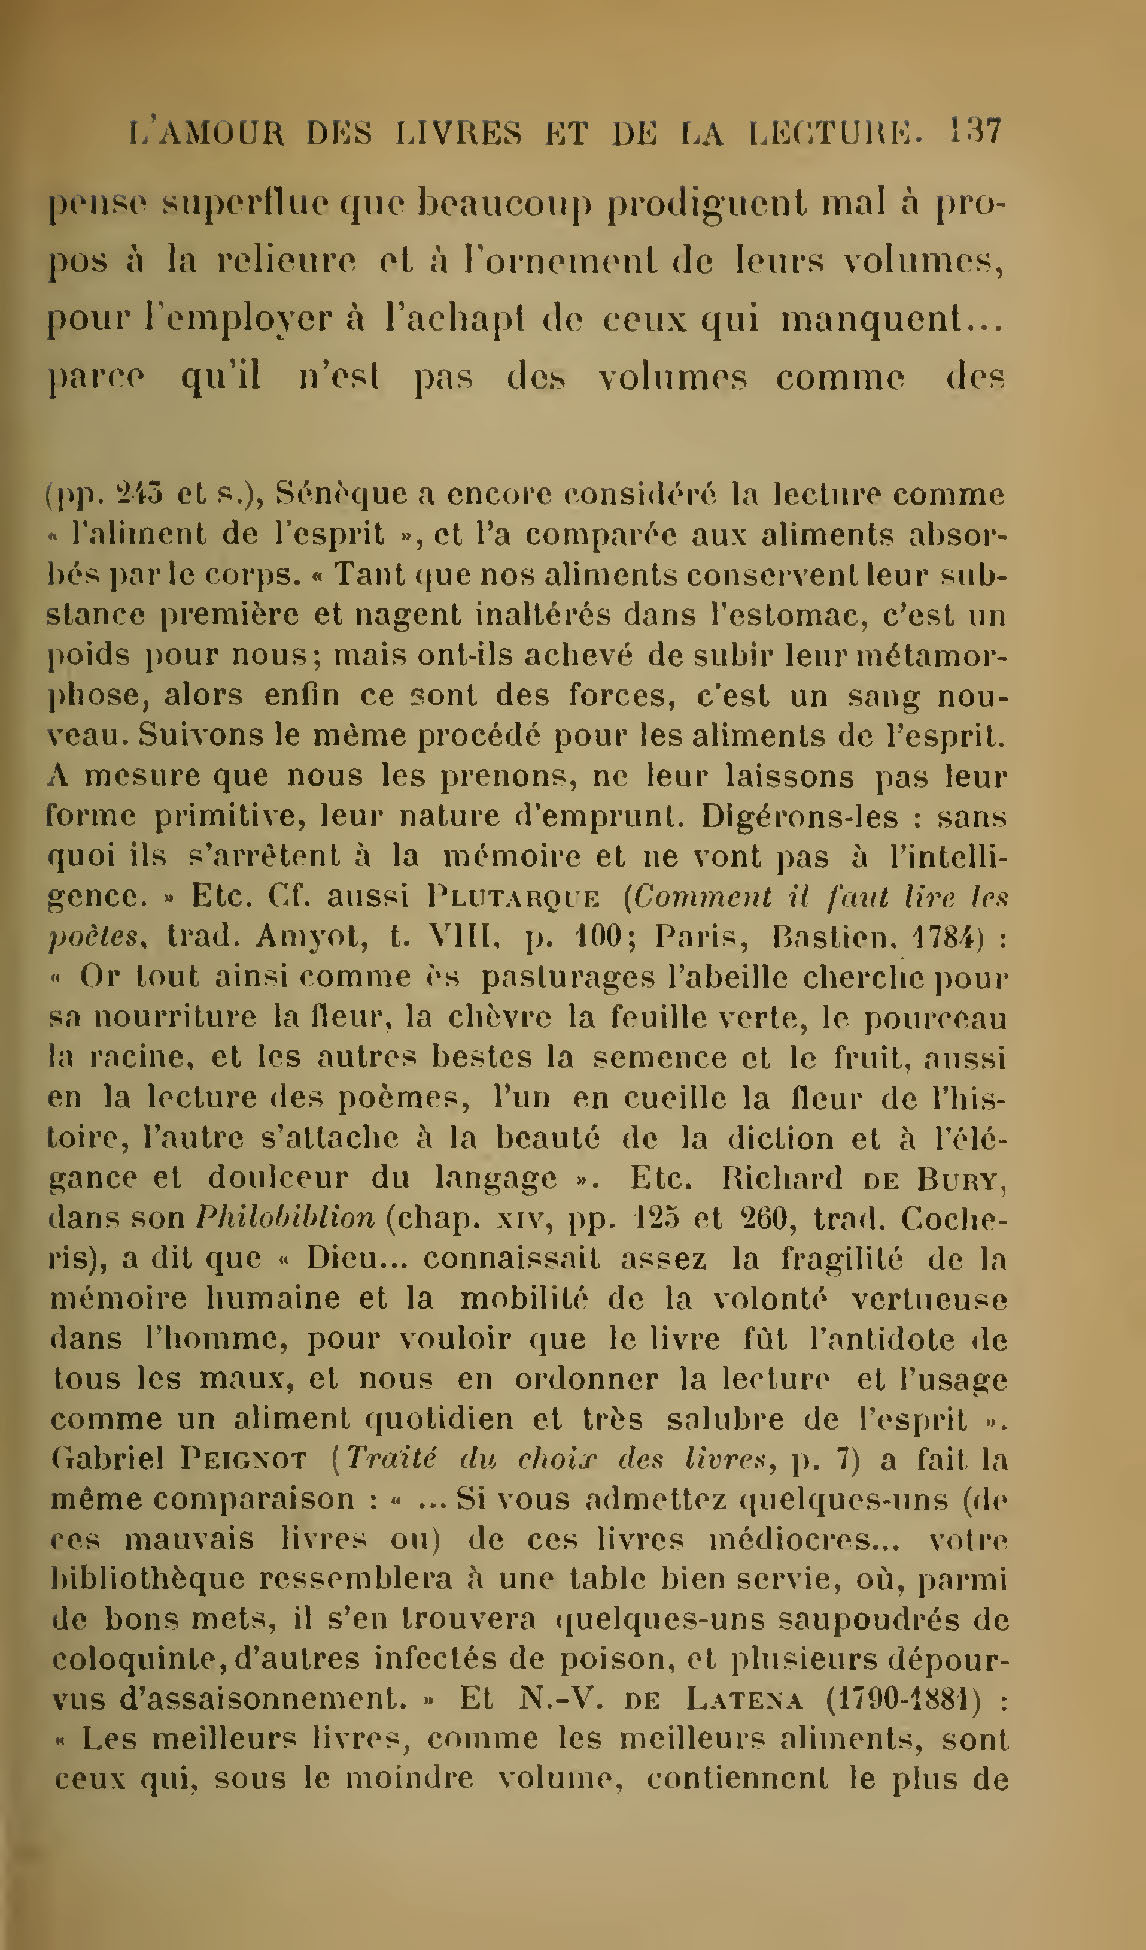 Albert Cim, Le Livre, t. I, p. 137.